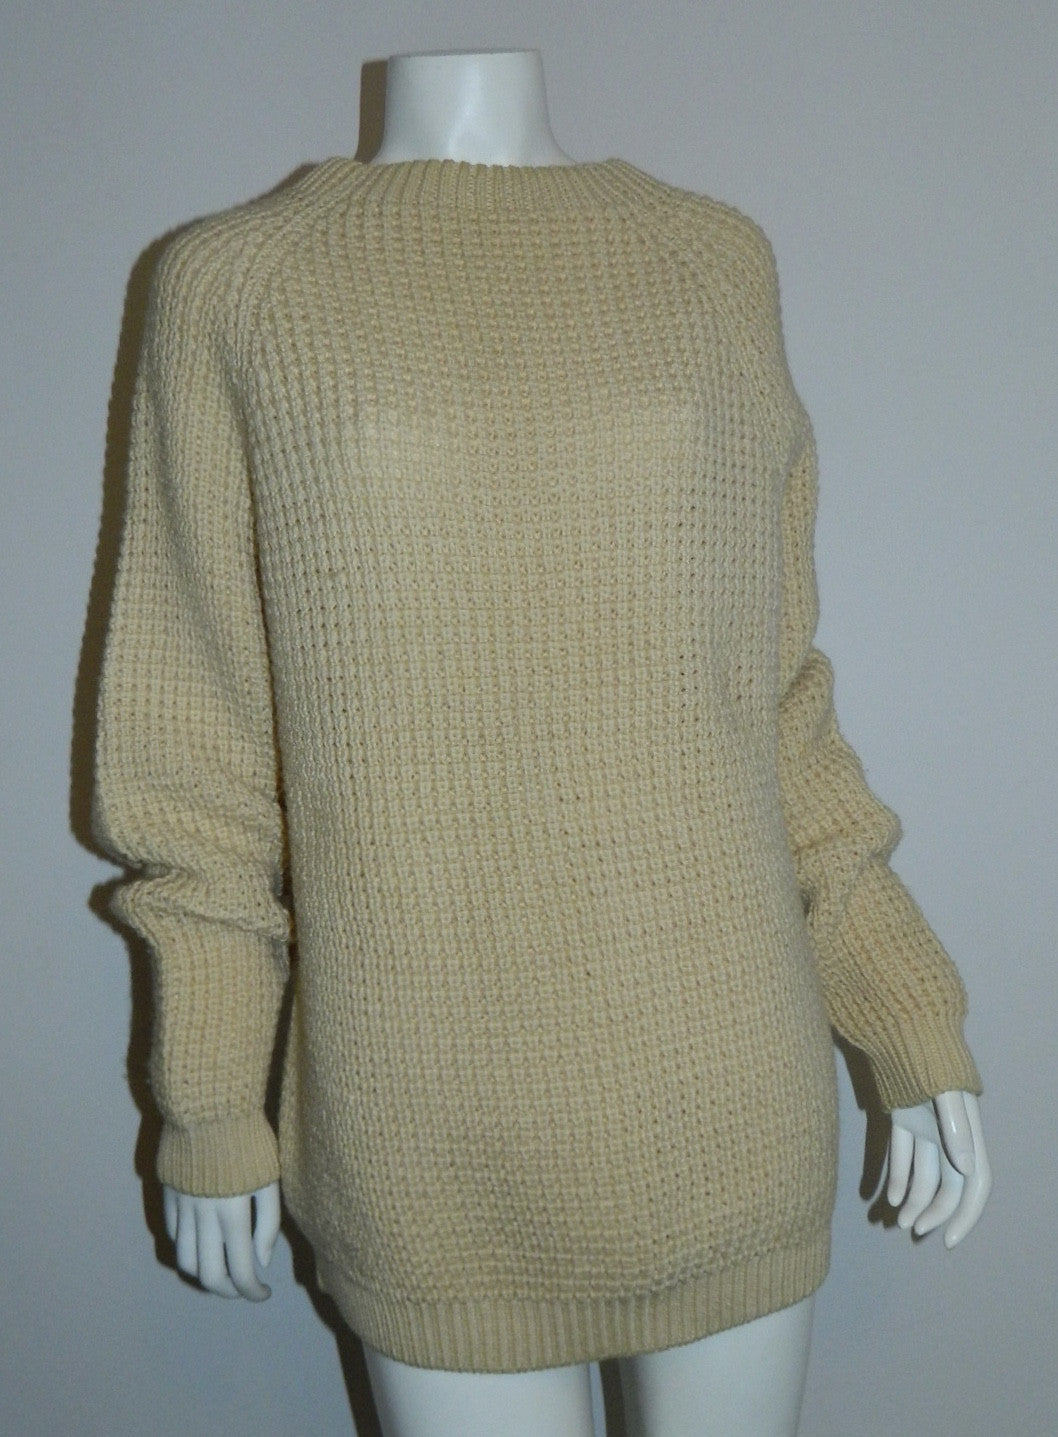 vintage FISHERMANS sweater 1970s Axello Denmark cream wool 52 / US M - L